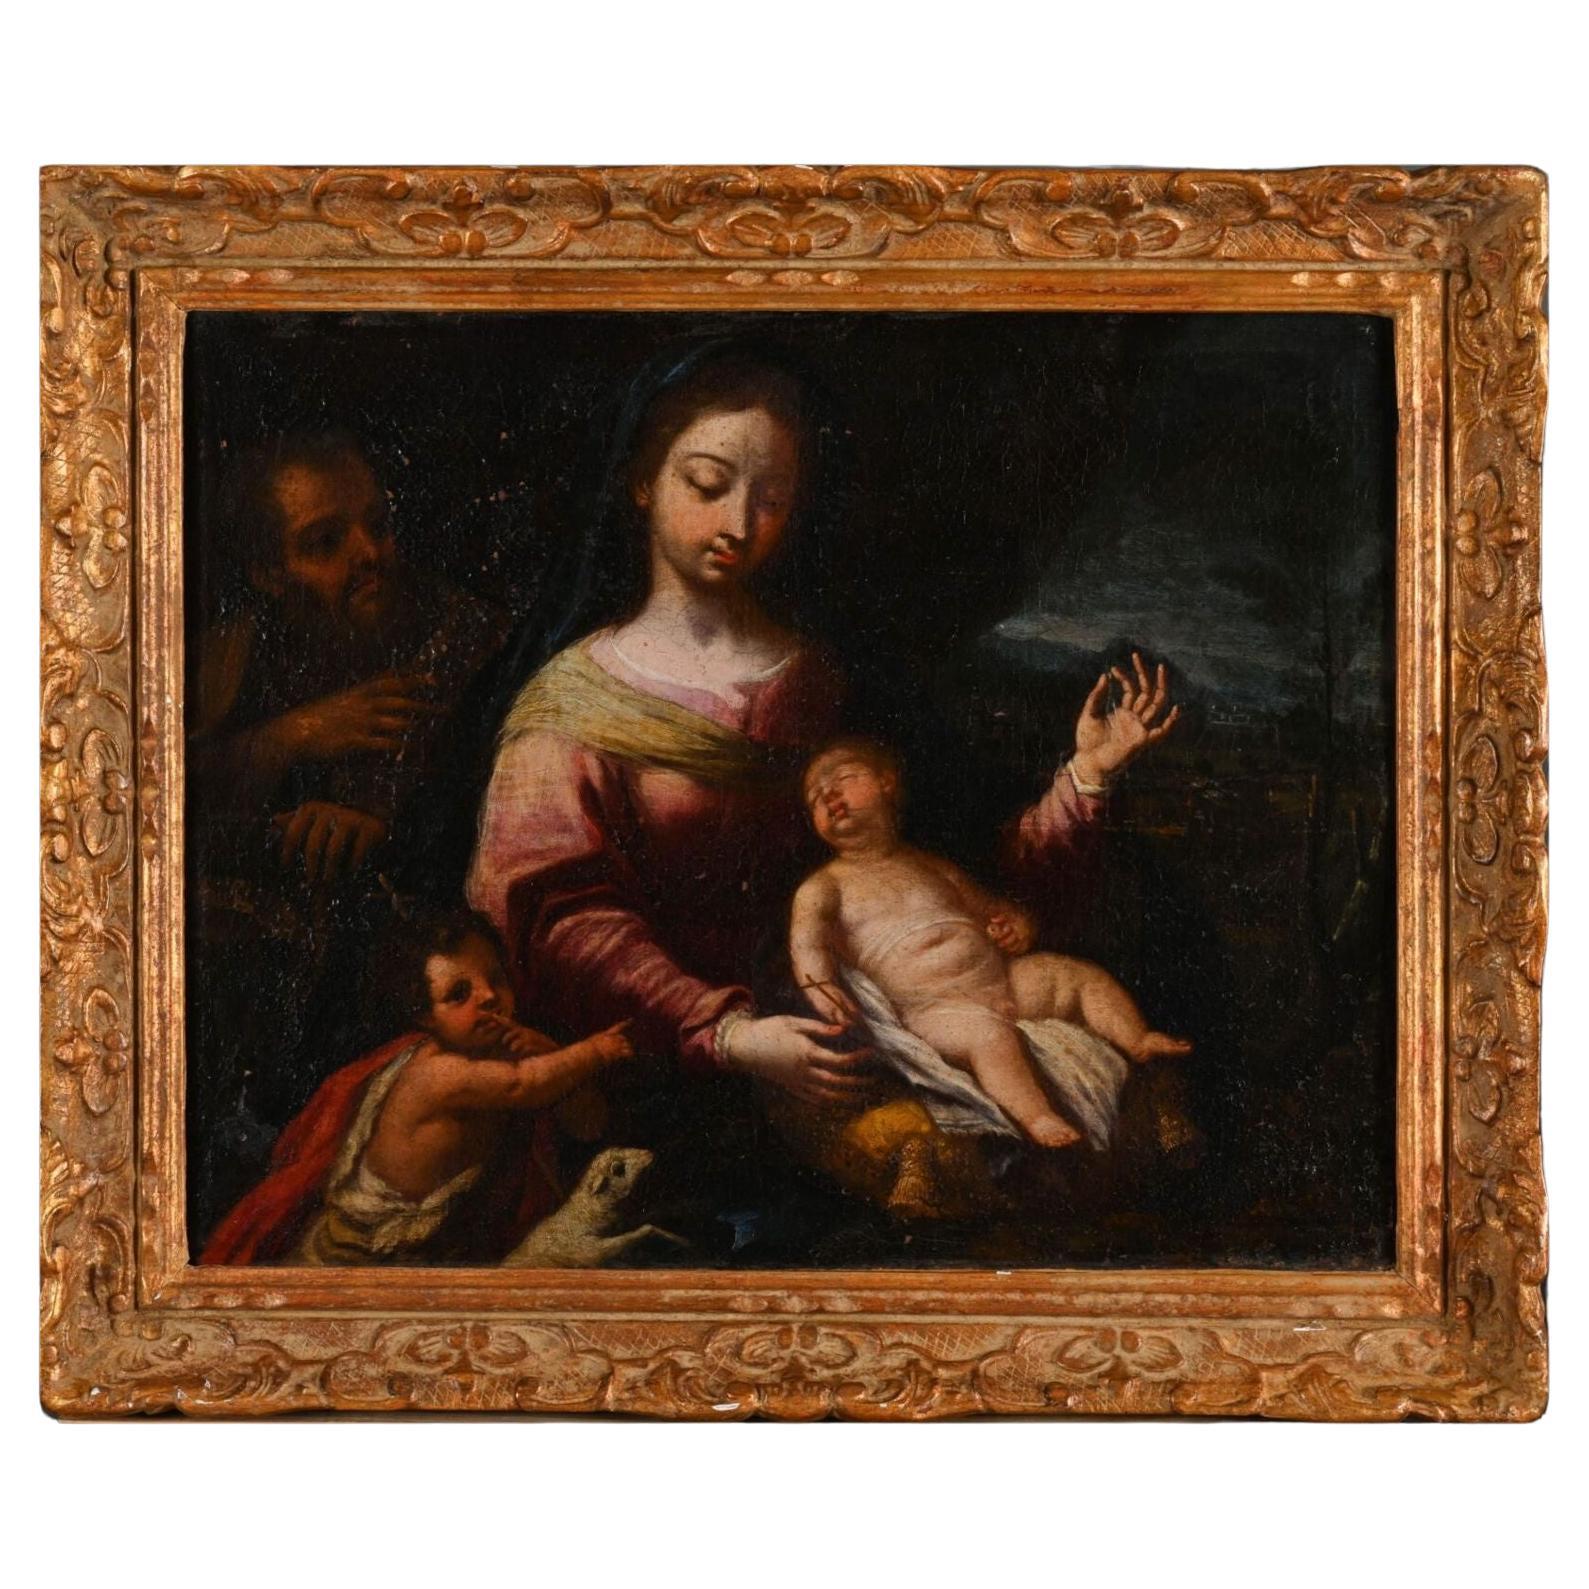 17th century Italian School  "Holy Family with St. John the Baptist" For Sale